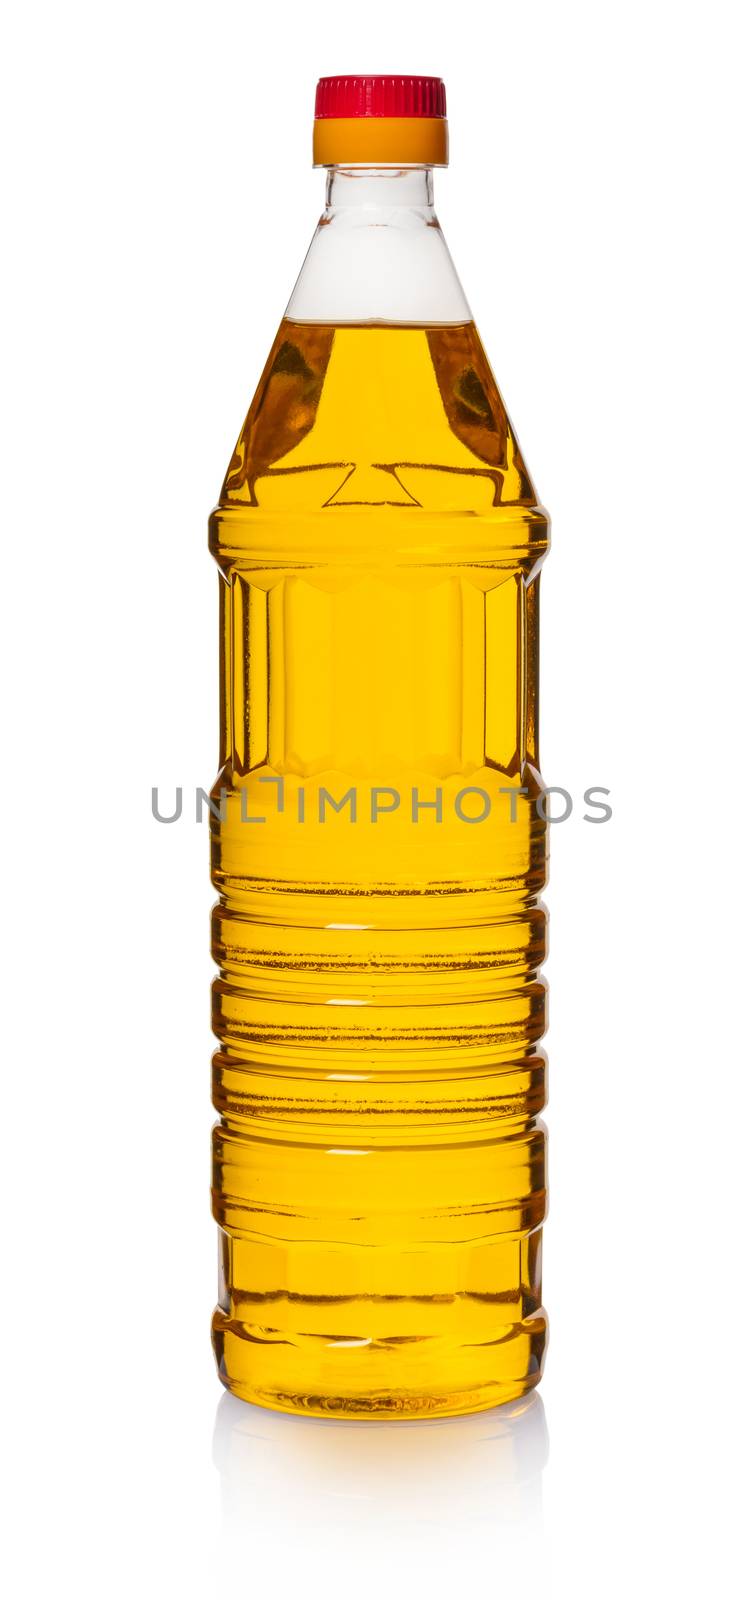 sunflower oil in bottle on white isolated background